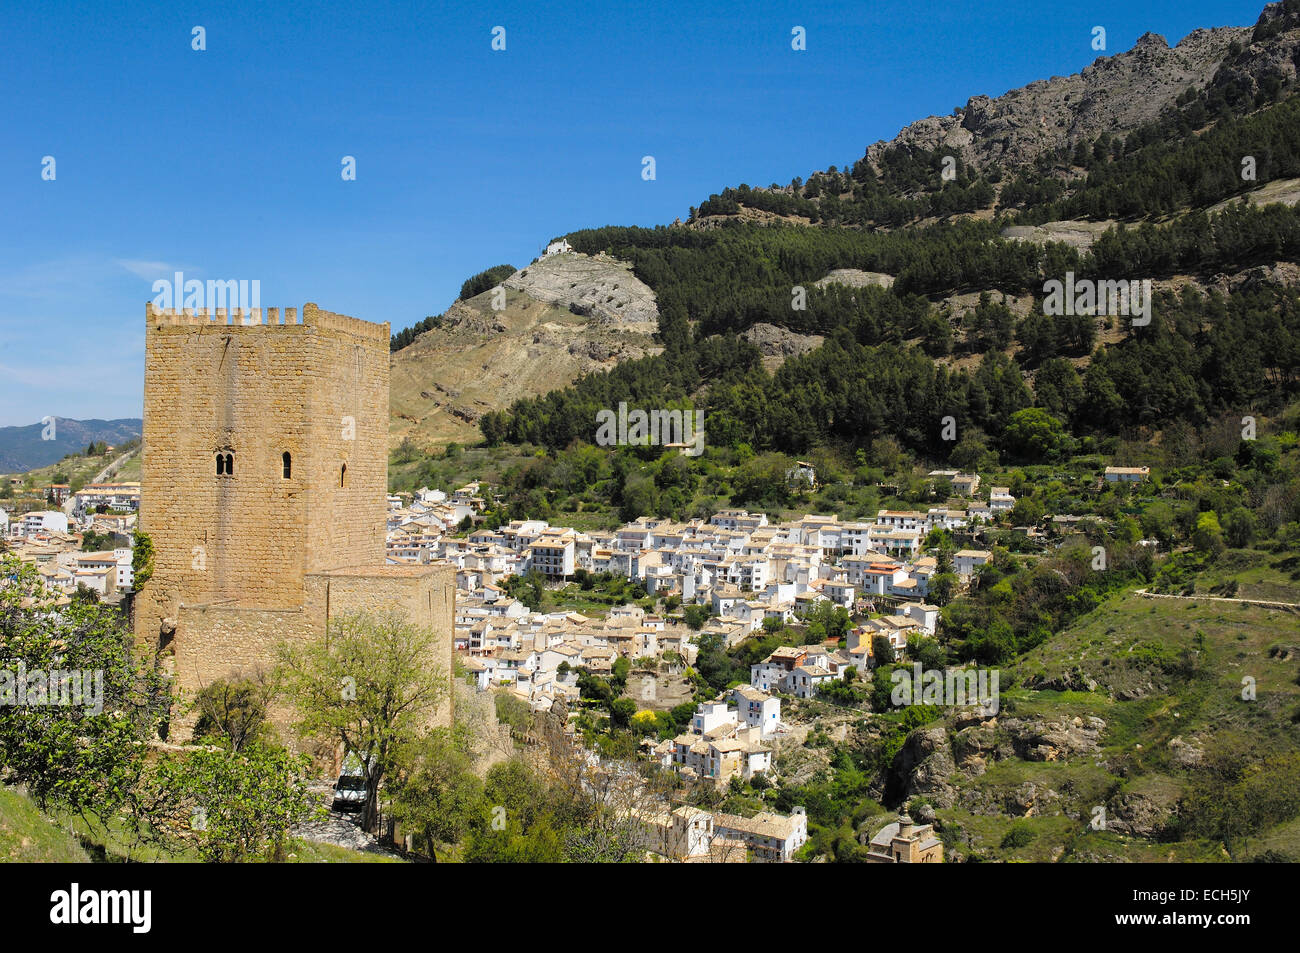 Yedra Castle in Cazorla village, Sierra de Cazorla Segura y Las Villas Natural Park, province of Jaen, Andalusia, Spain, Europe Stock Photo